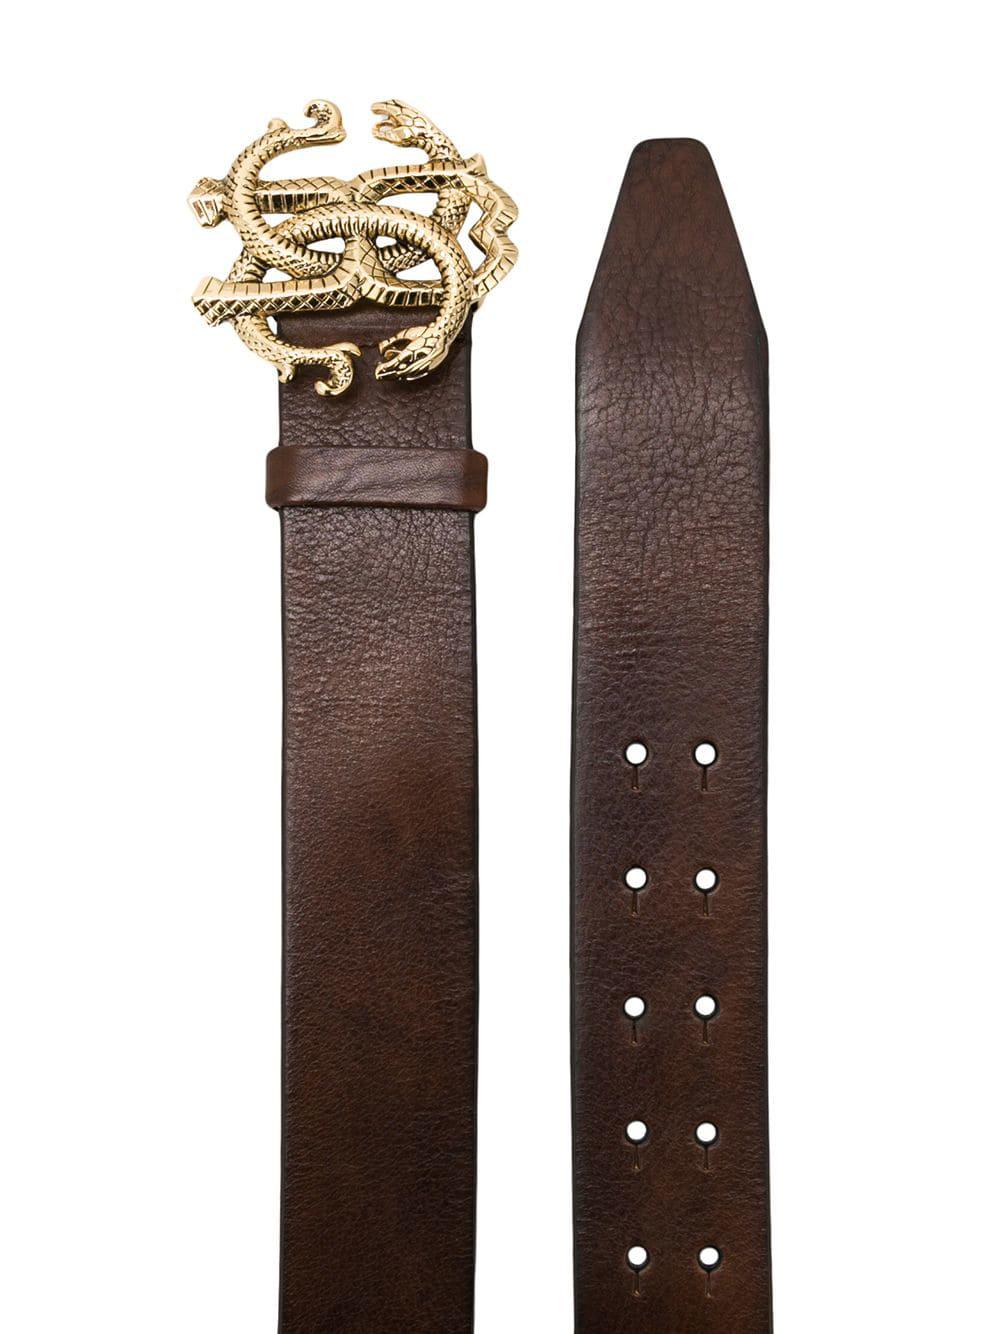 Roberto Cavalli Leather Snake Logo Belt in Brown for Men - Lyst